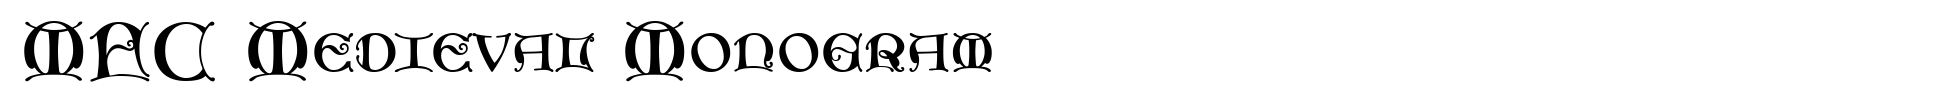 MFC Medieval Monogram